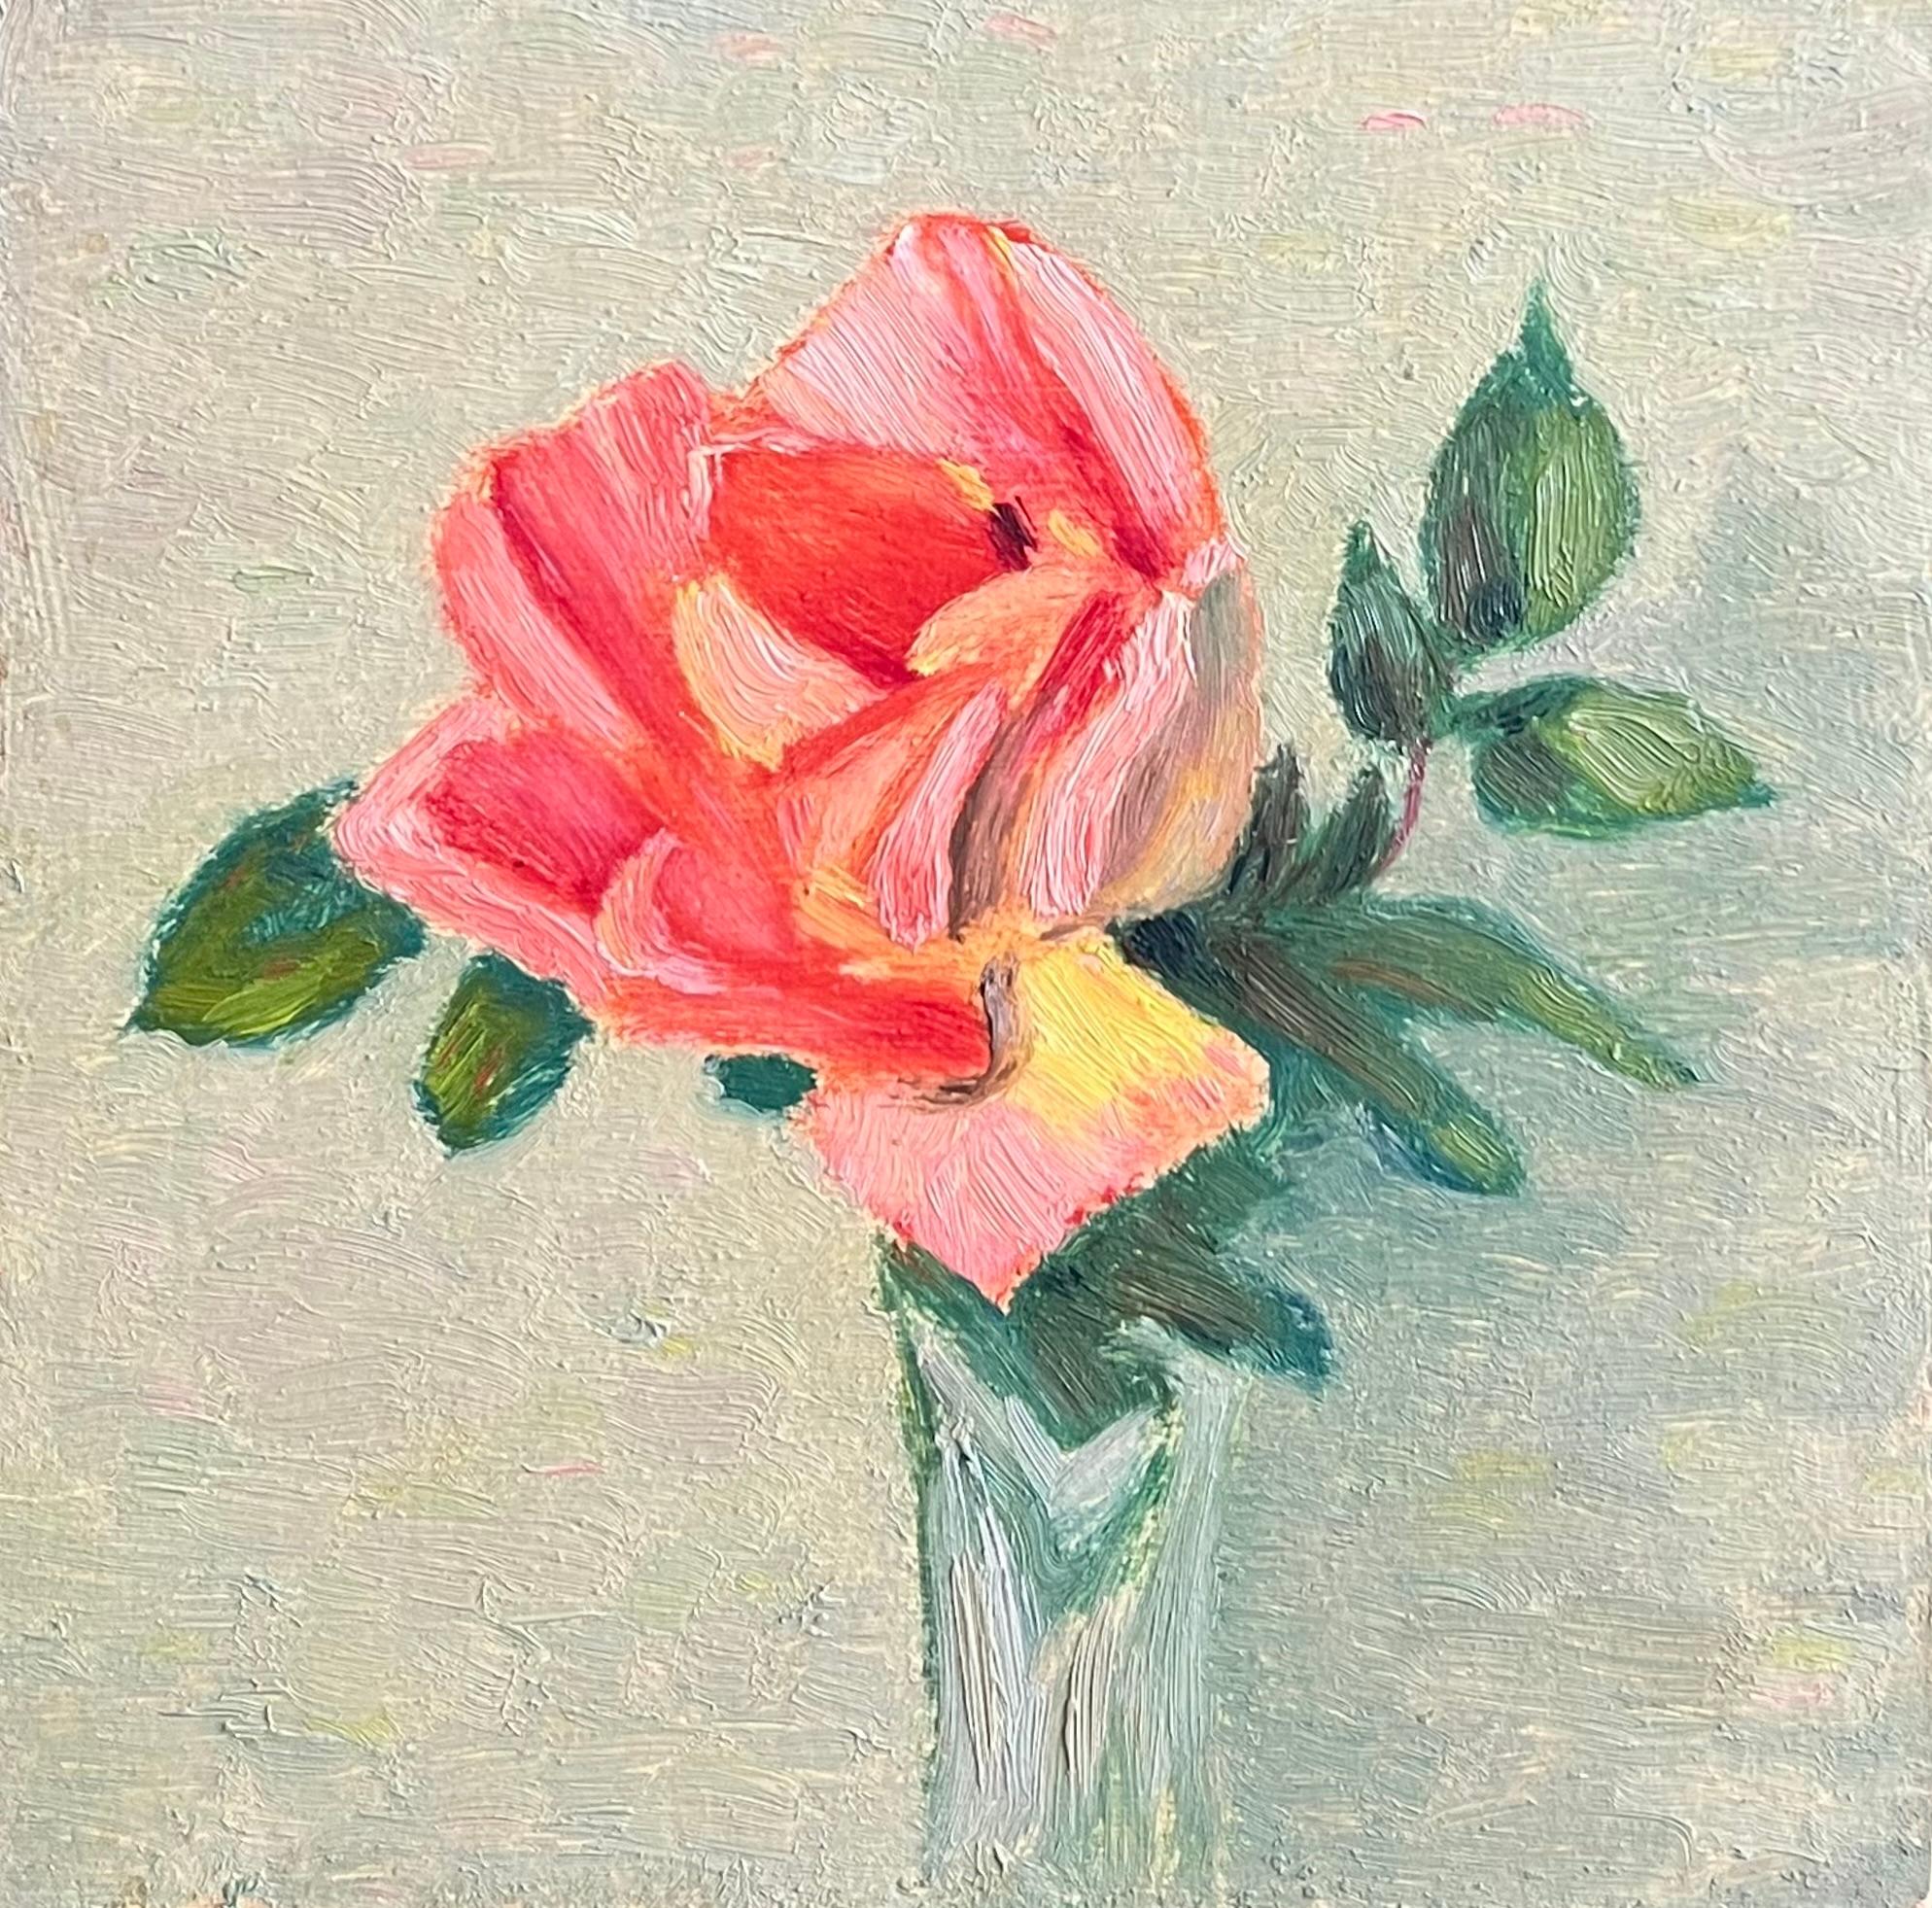 Rose in Flower Vase oil ptg Red, Pink & Yellow - Santa Barbara, California 0-202 - Painting by Francis Draper Jr.